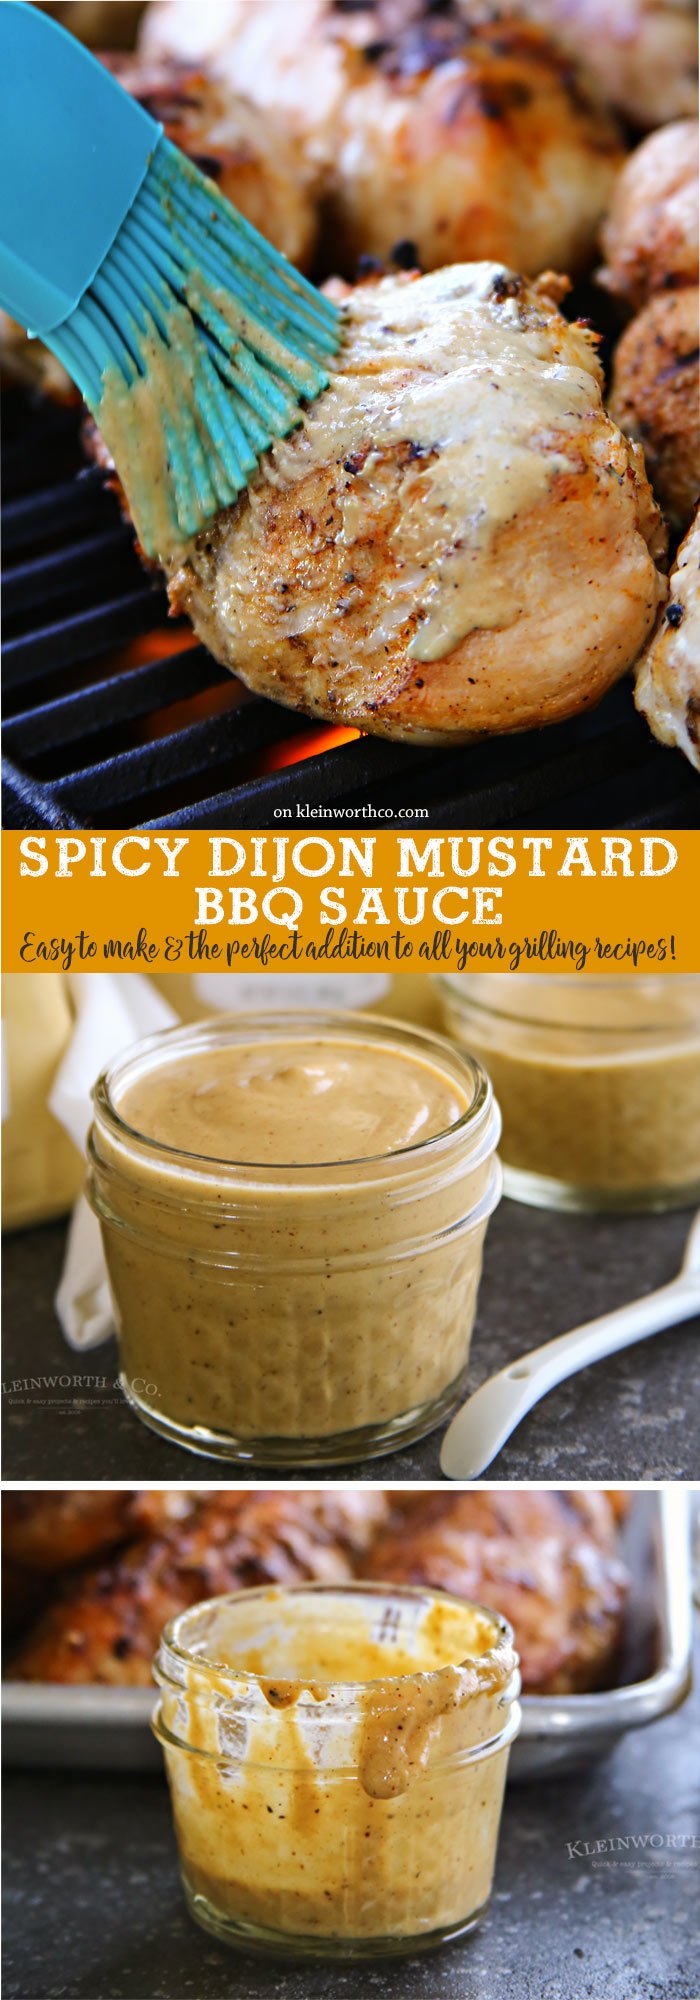 Spicy Dijon Mustard BBQ Sauce